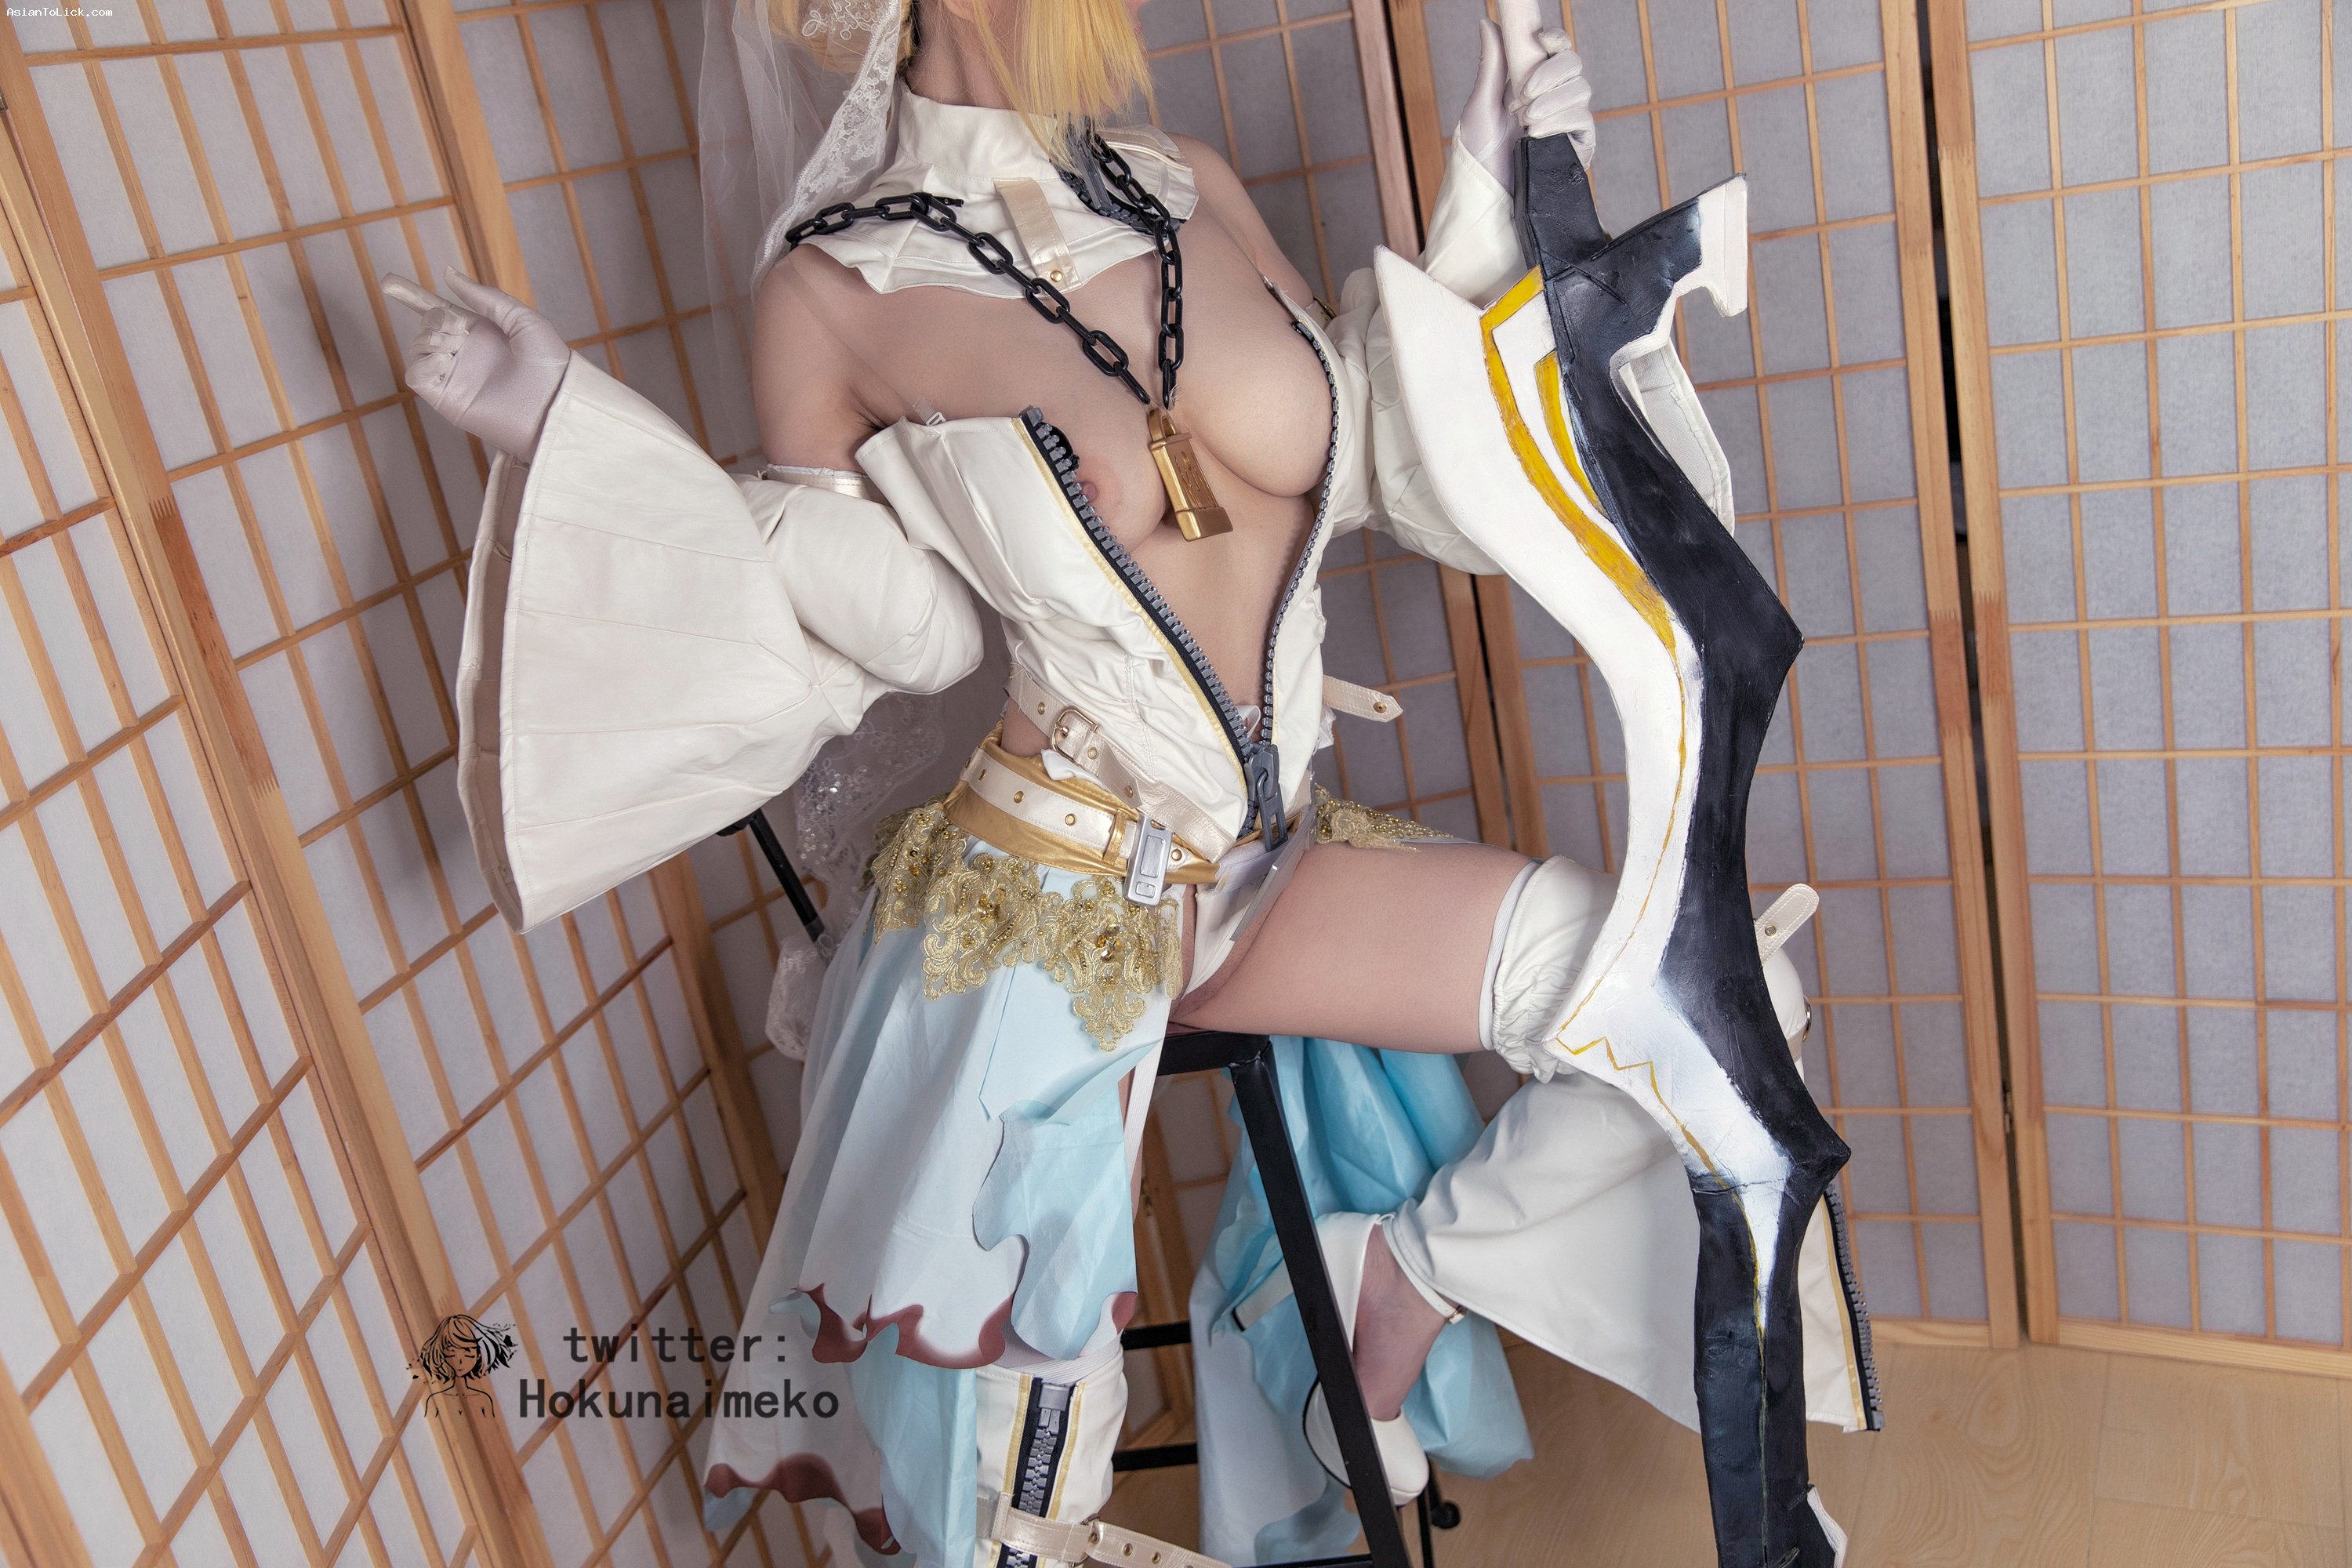 Fate/Grand Order Cosplay - Hokunaimeko Nero Bride Selfie Collection 25 